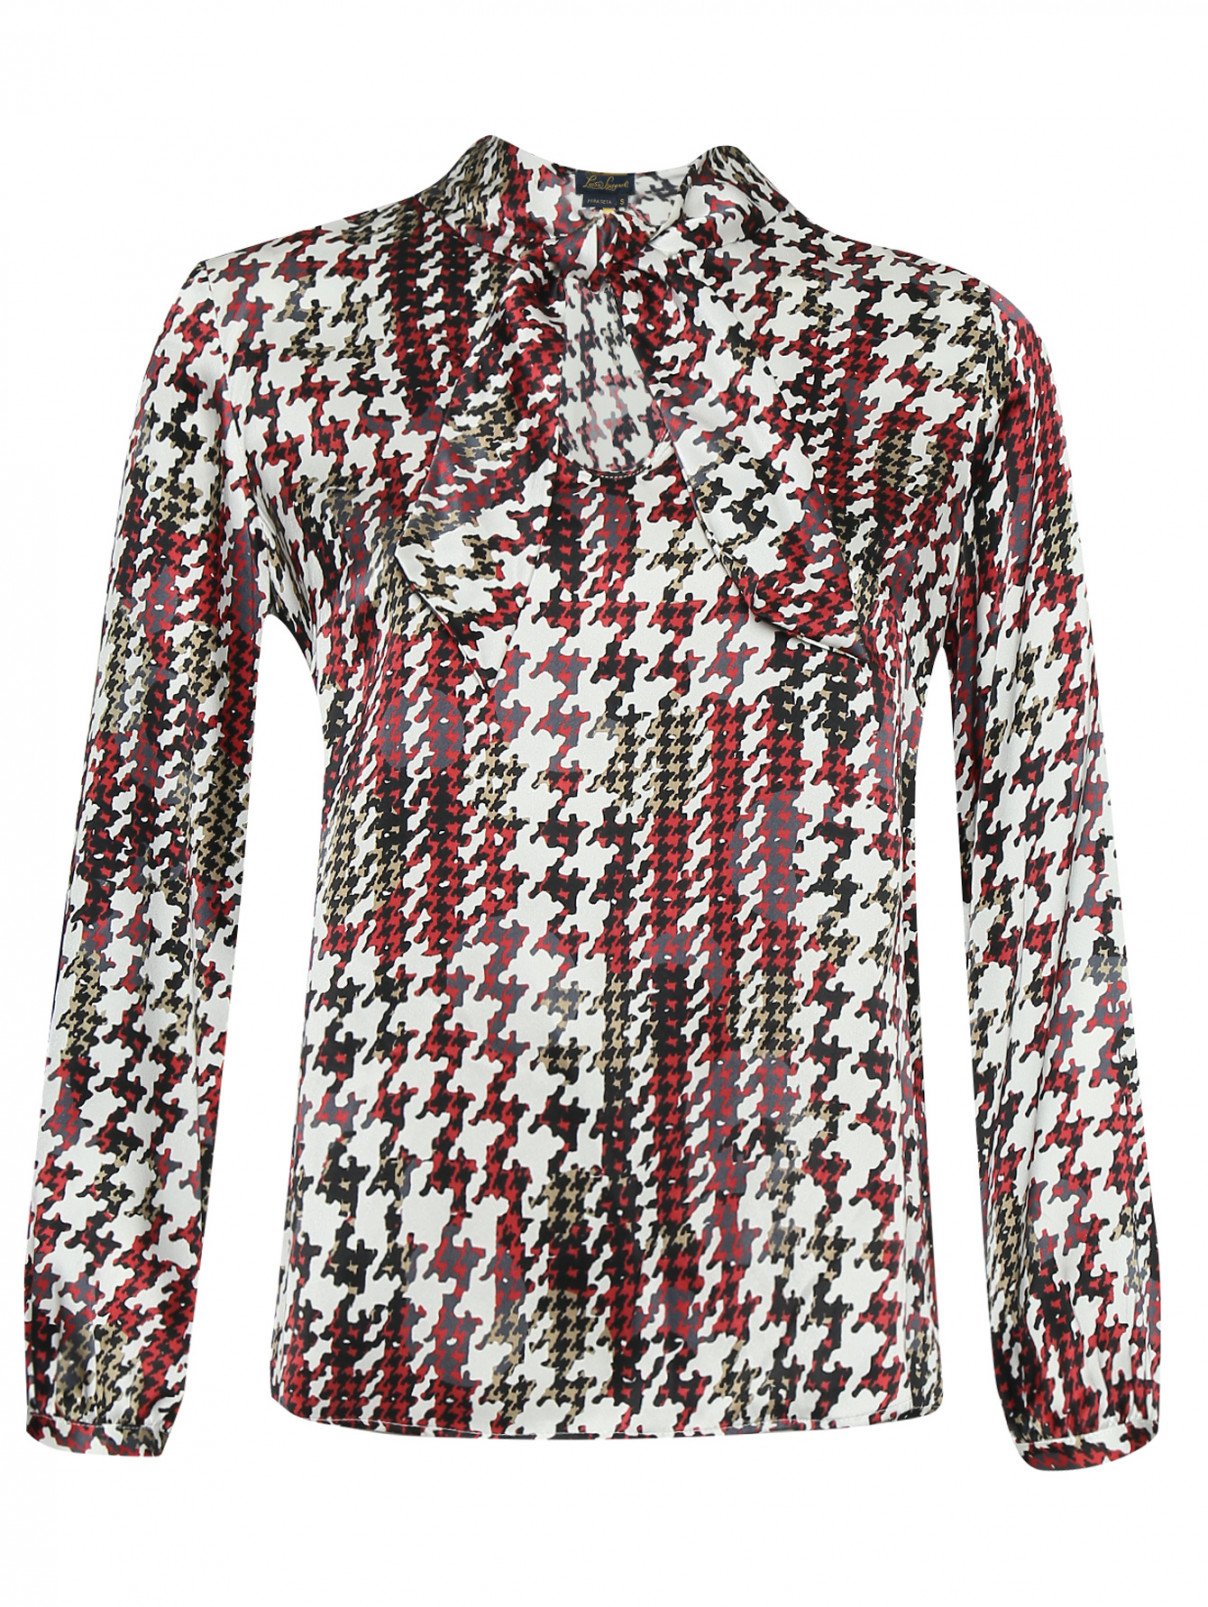 Блуза из шелка с узором Luisa Spagnoli  –  Общий вид  – Цвет:  Узор